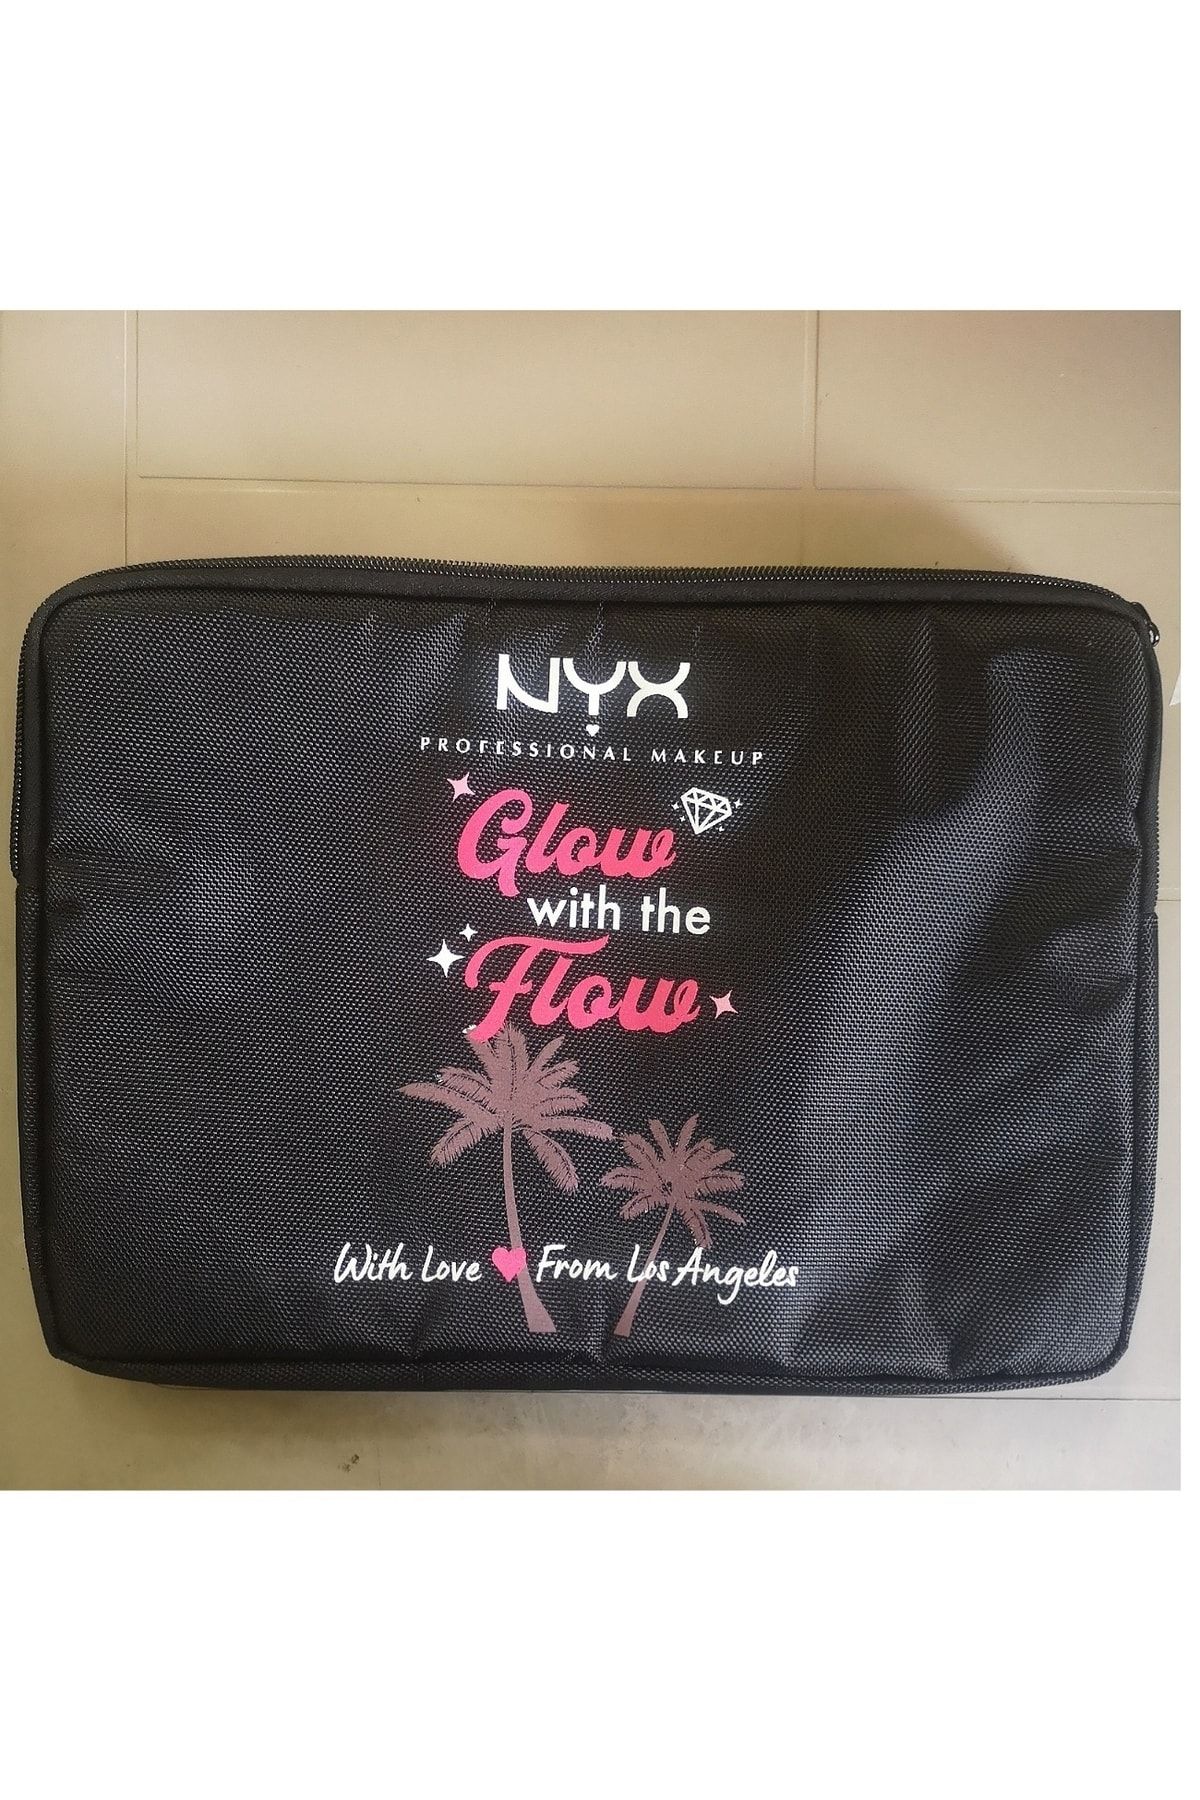 NYX Professional Makeup کیف آرایشی سیاه با طراحی شیک و مناسب برای محصولات آرایشی